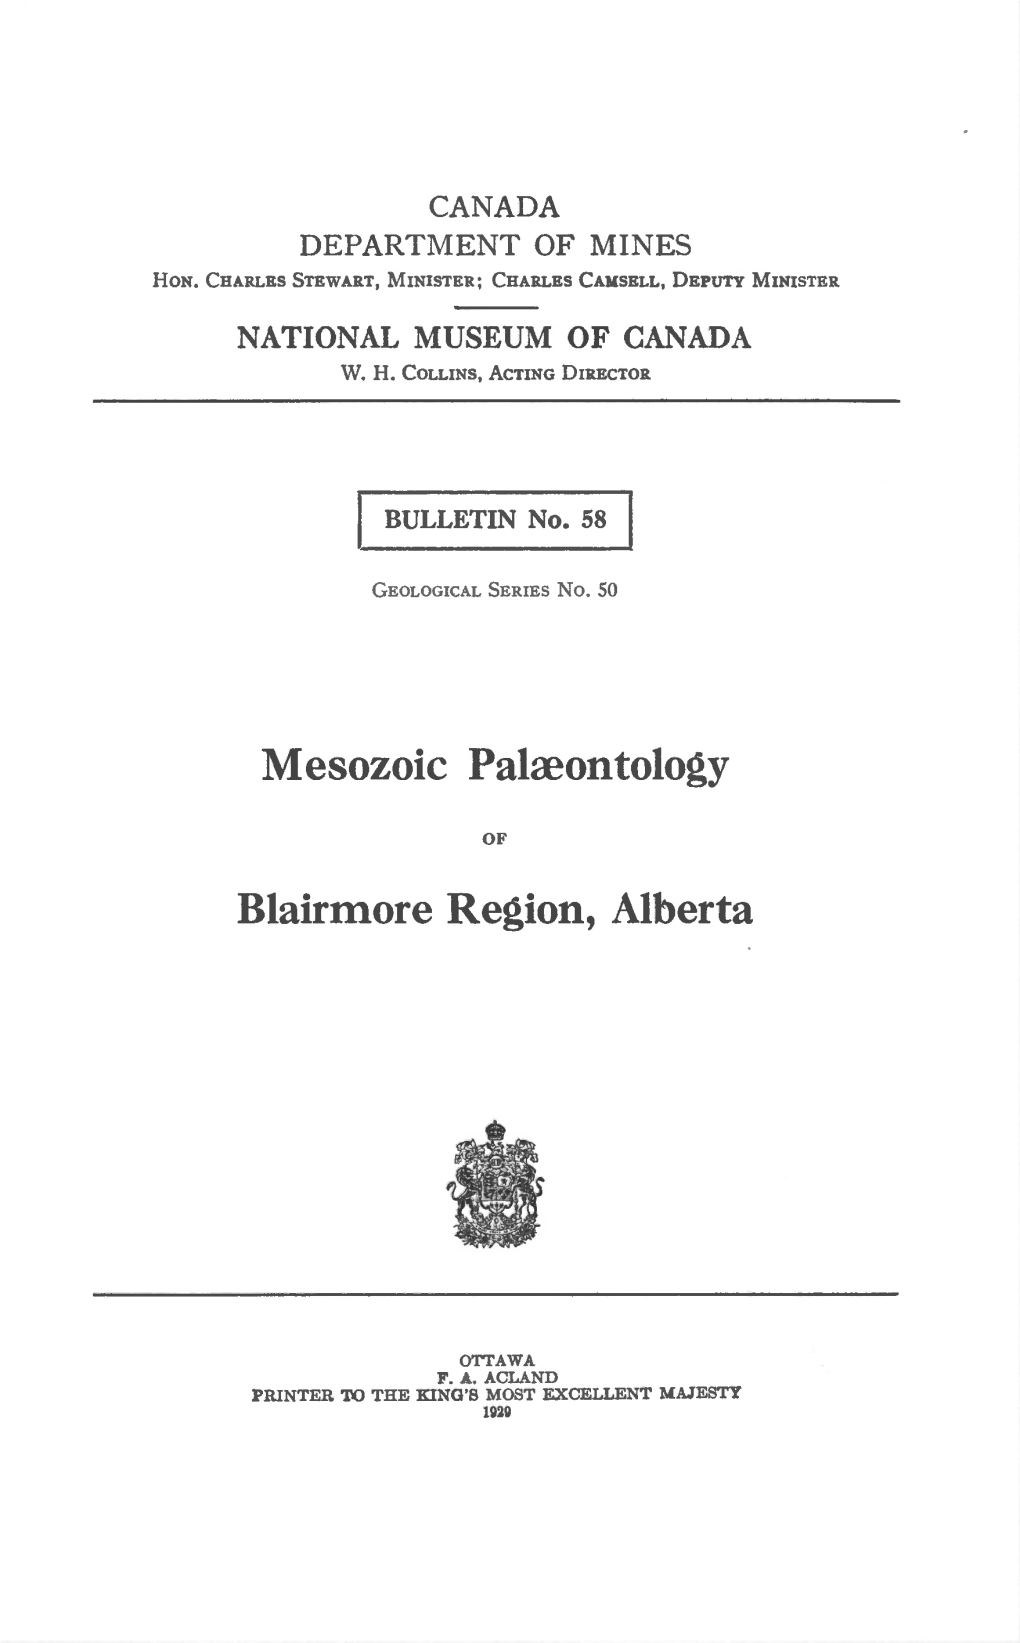 Mesozoic Palreontology Blairmore Region, Alberta